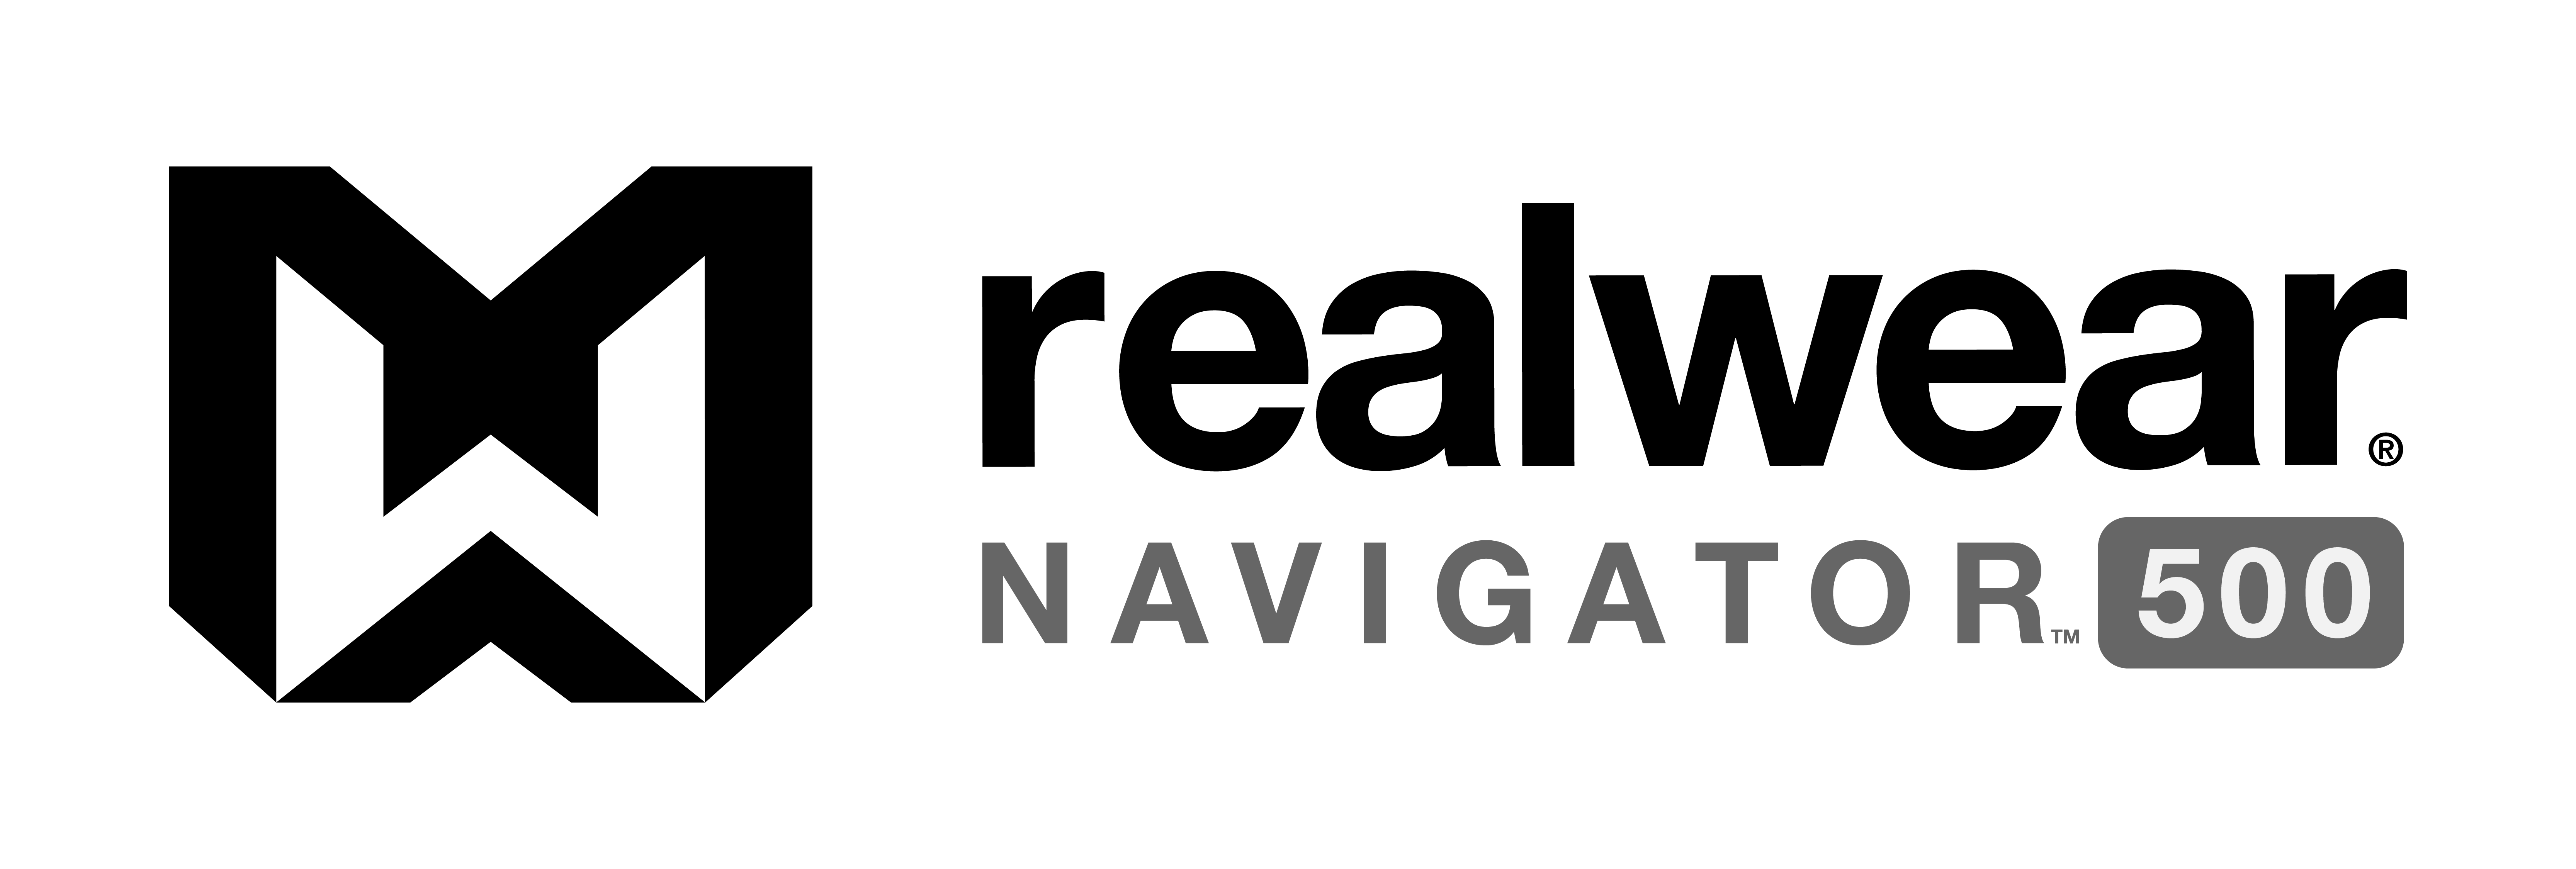 RealWear Navigator 500 logo - GREEN